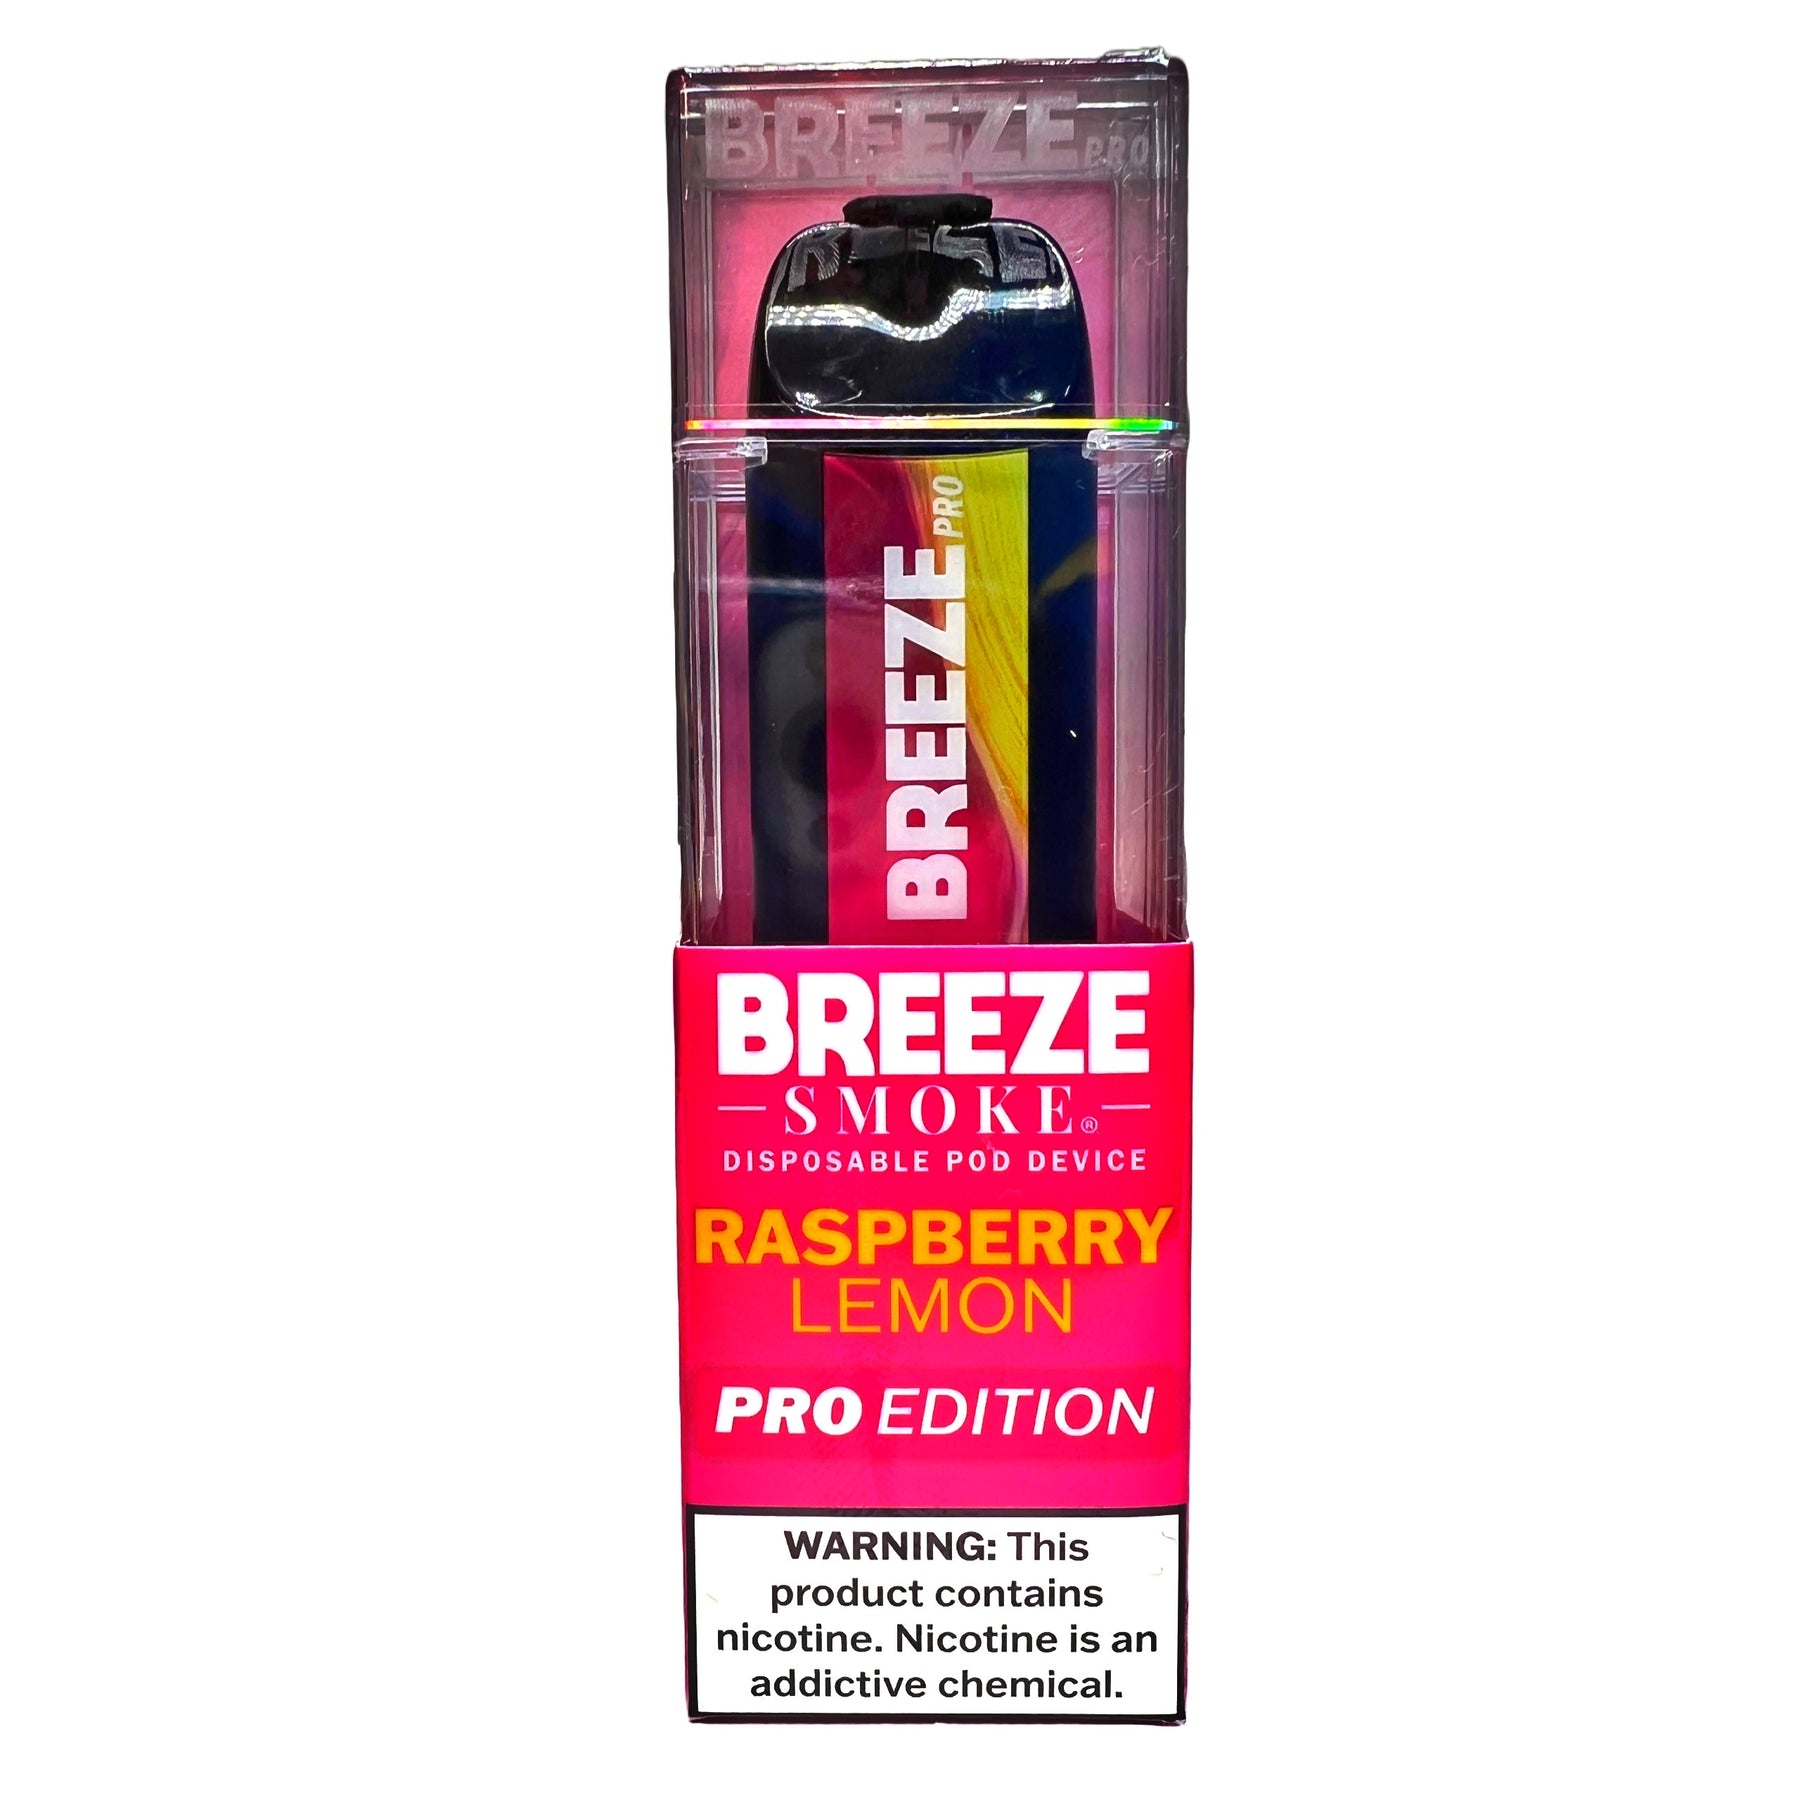 Breeze Pro Raspberry Lemon